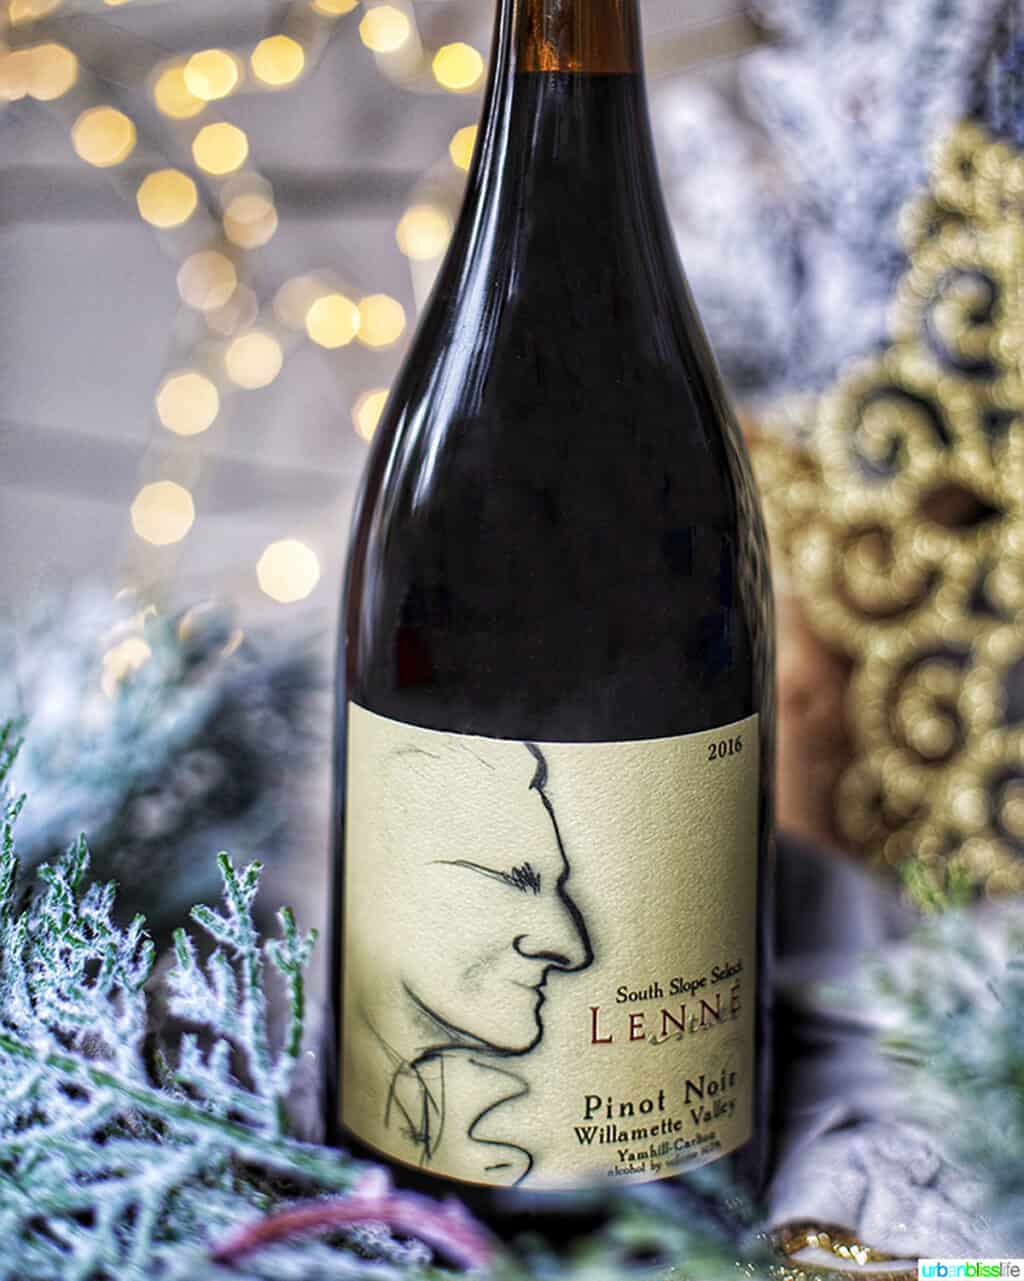 Lenne Estate Pinot Noir wine bottle in holiday setting